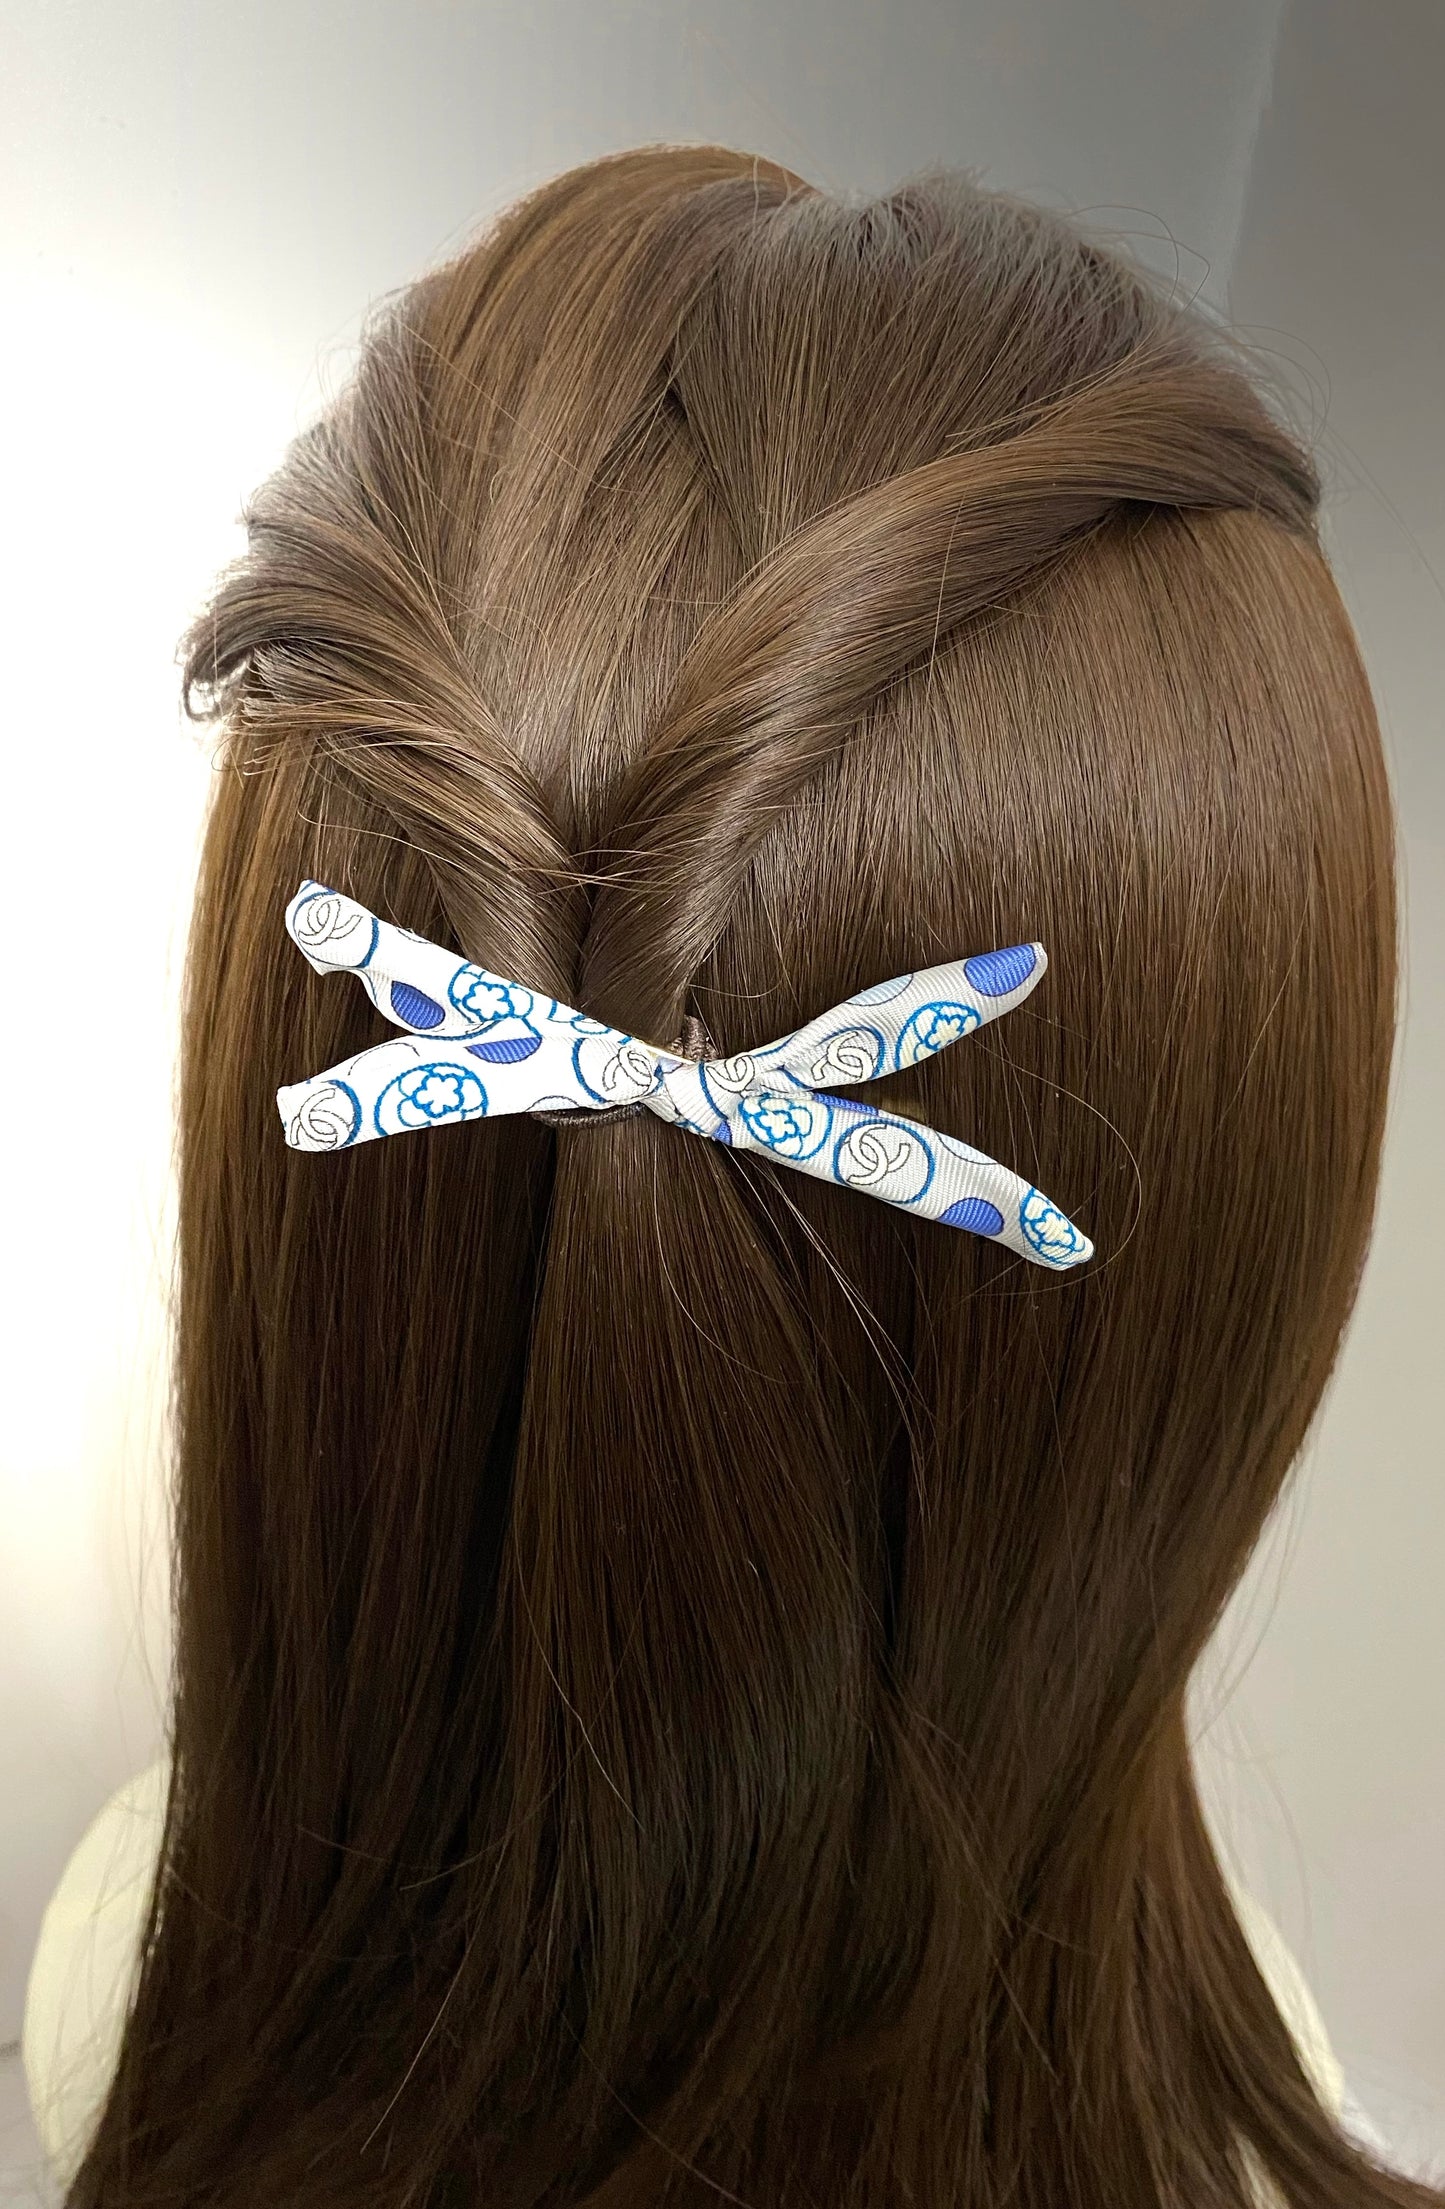 CC- Dove & Alegria Camellias- CC007- mini Double Ribbon Hairclip/ hairband/ earring